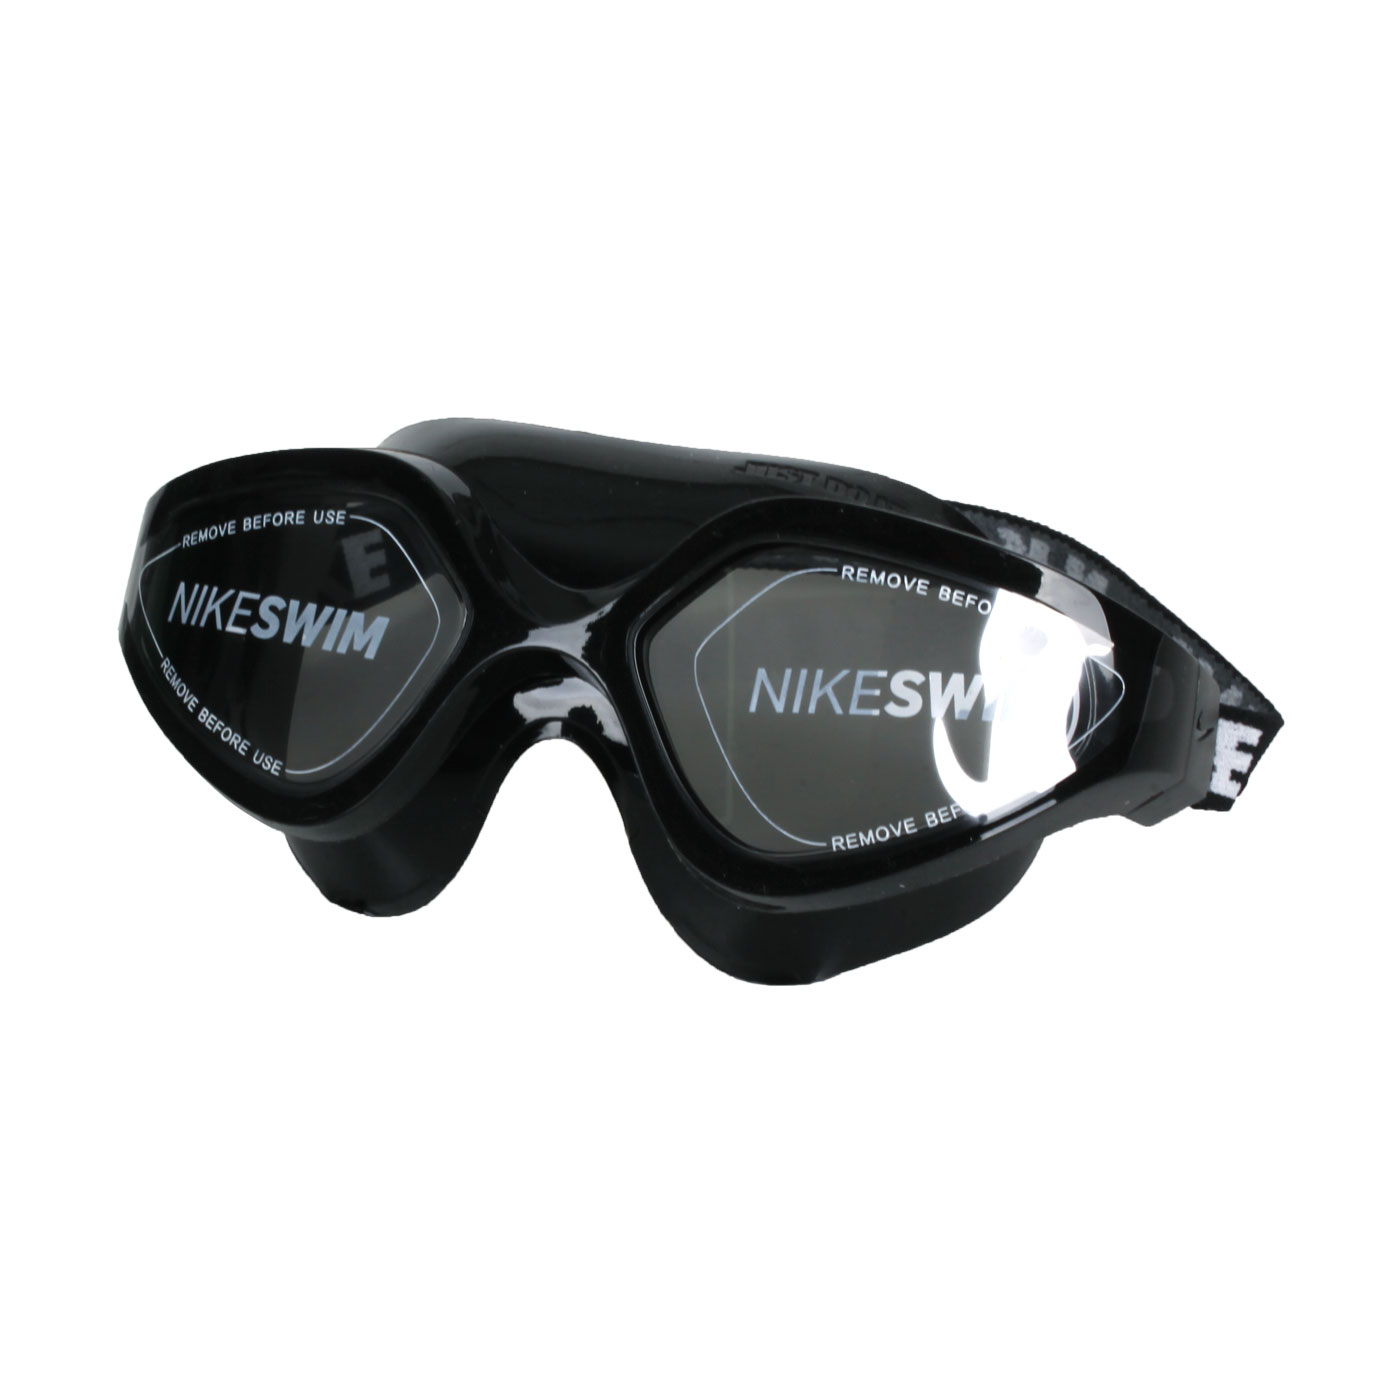 NIKE SWIM EXPANSE成人超廣角護目泳鏡 NESSC151-005 - 黑